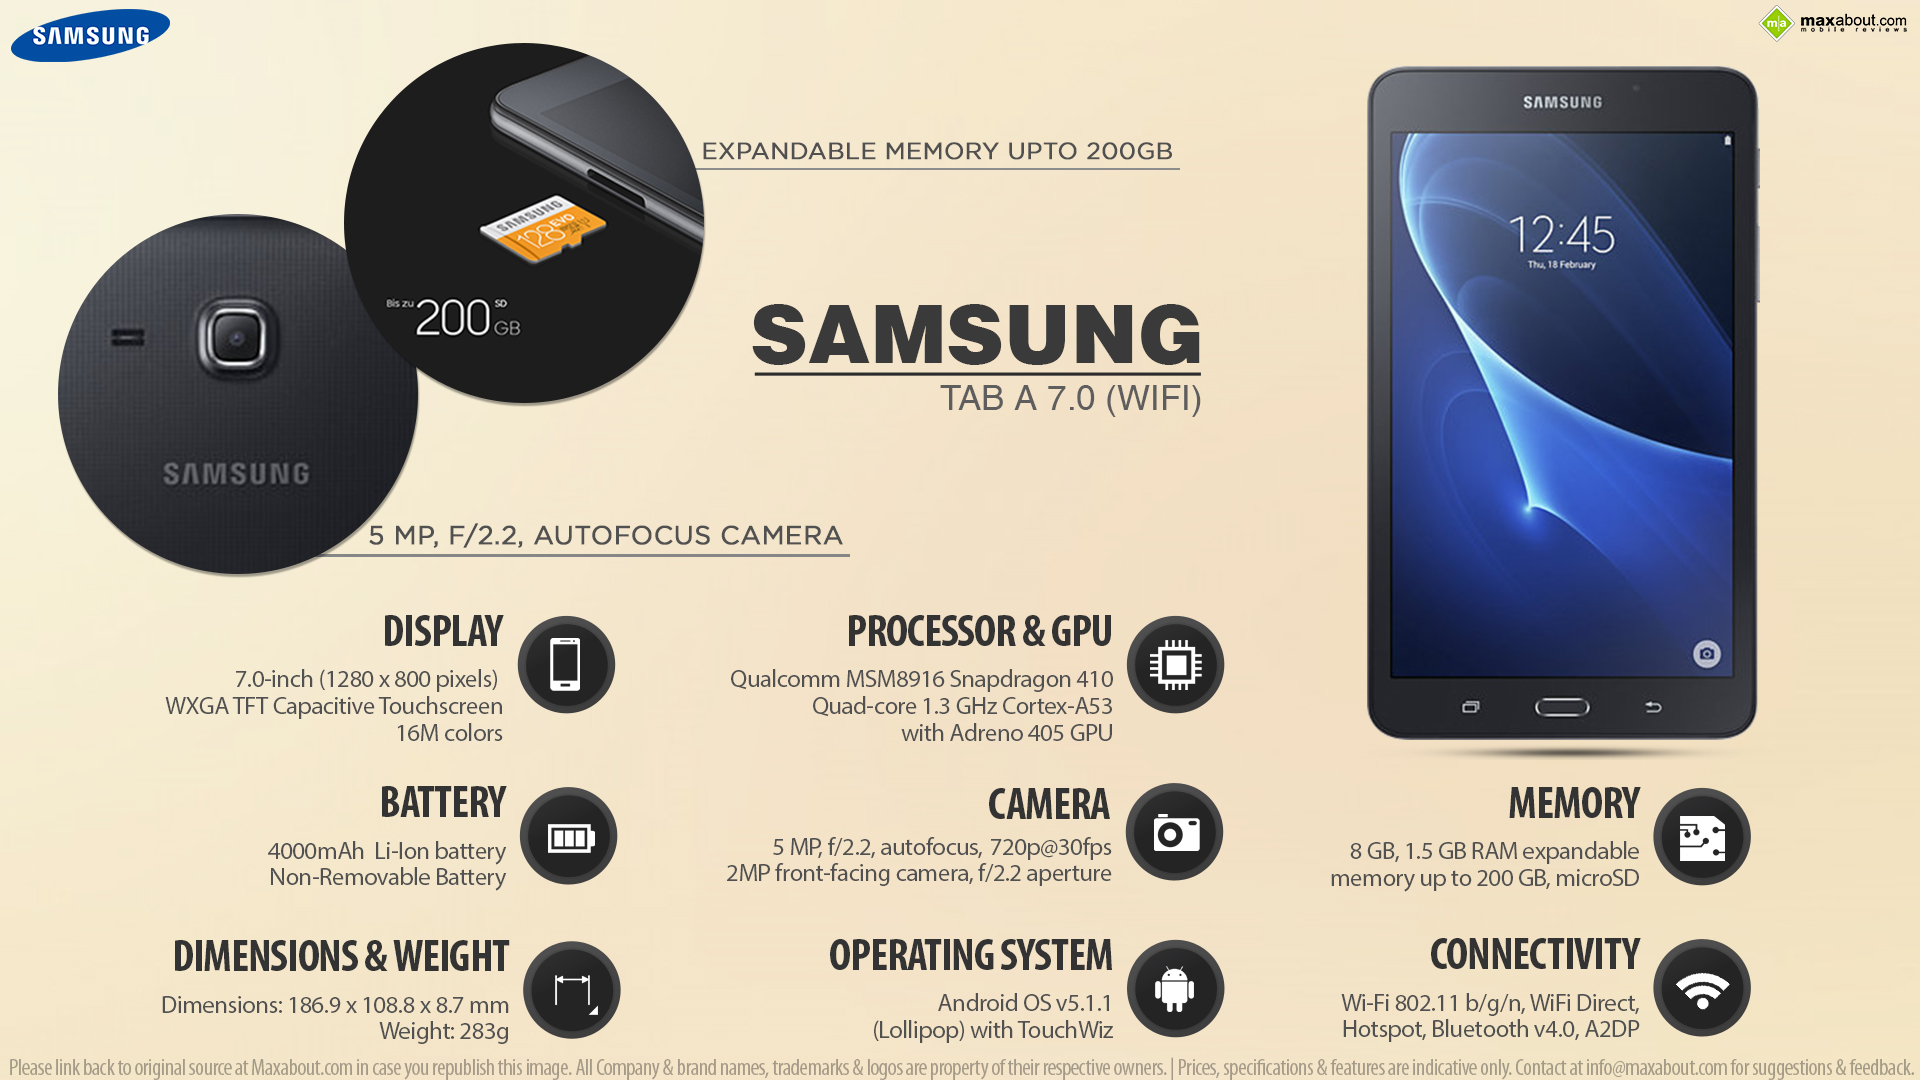 Quick Facts - Samsung Galaxy Tab A 7.0 Wi-Fi (2016)